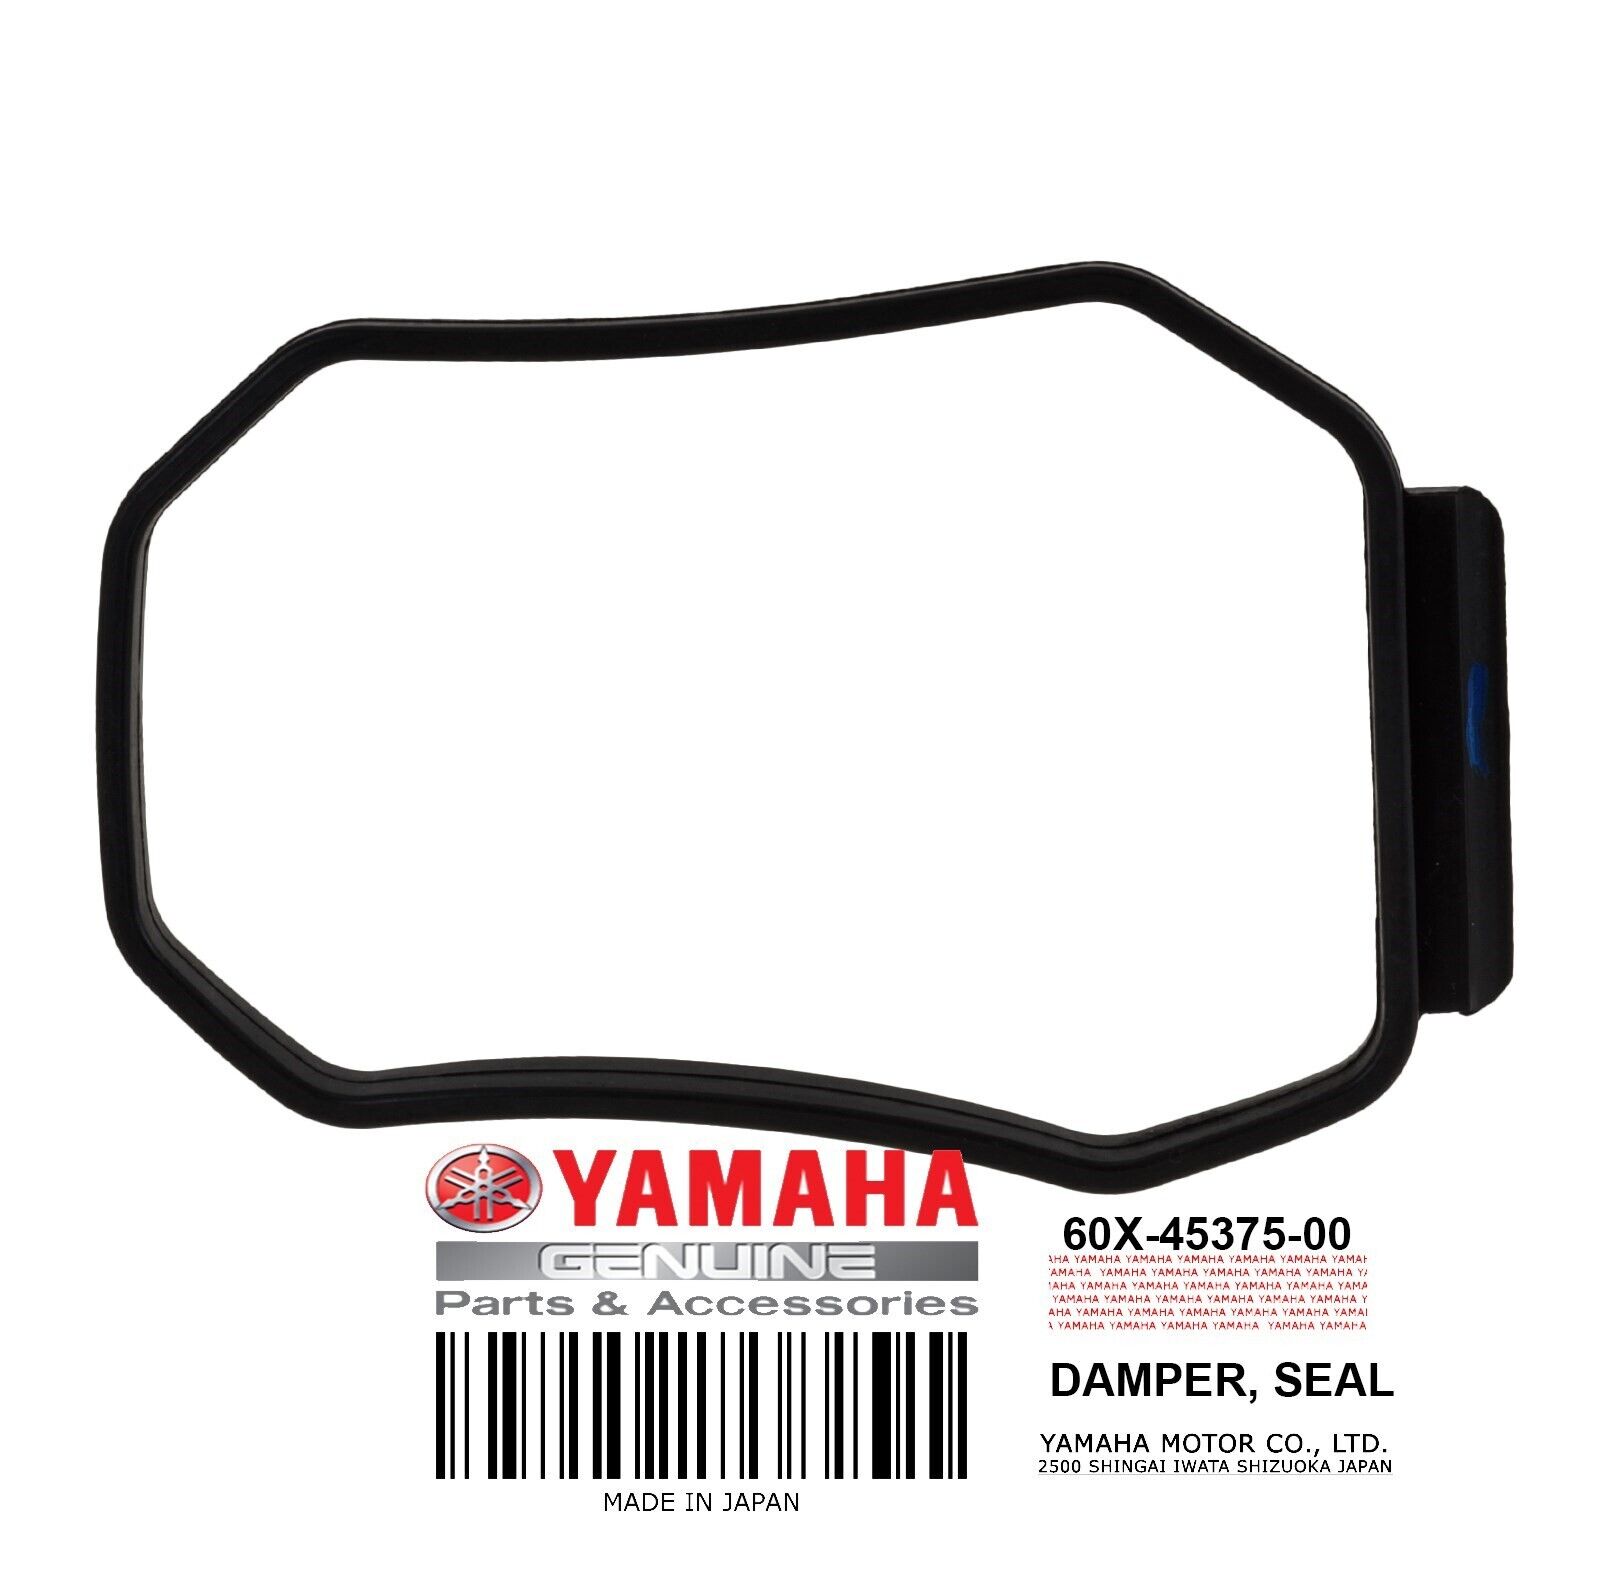 Yamaha OEM Dampner, Seal 60X-45375-00-00 